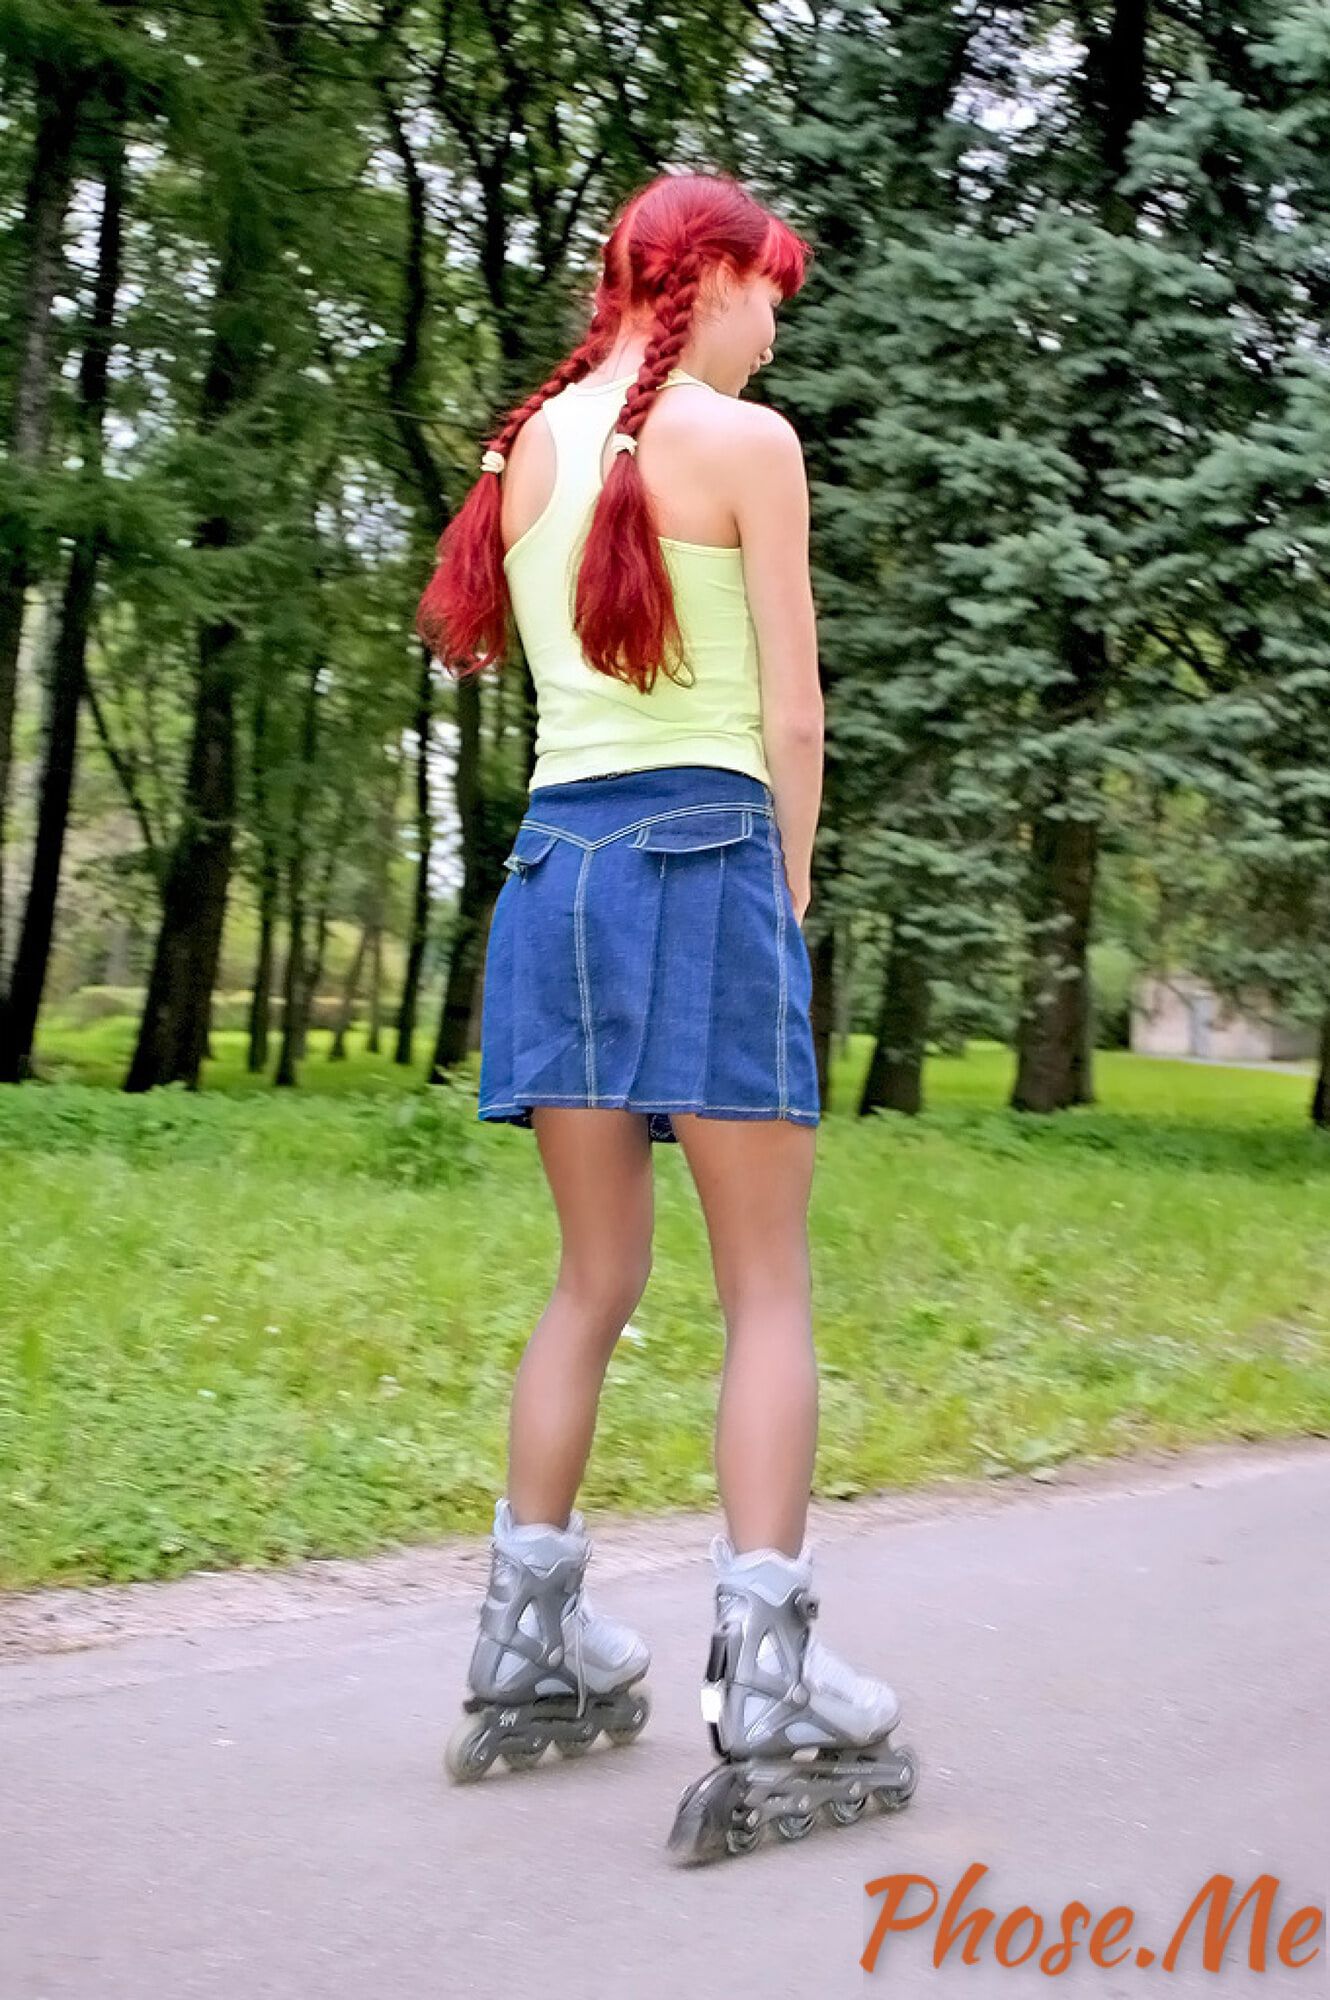 Redhead On Rollerblades Wearing Pantyhose #32